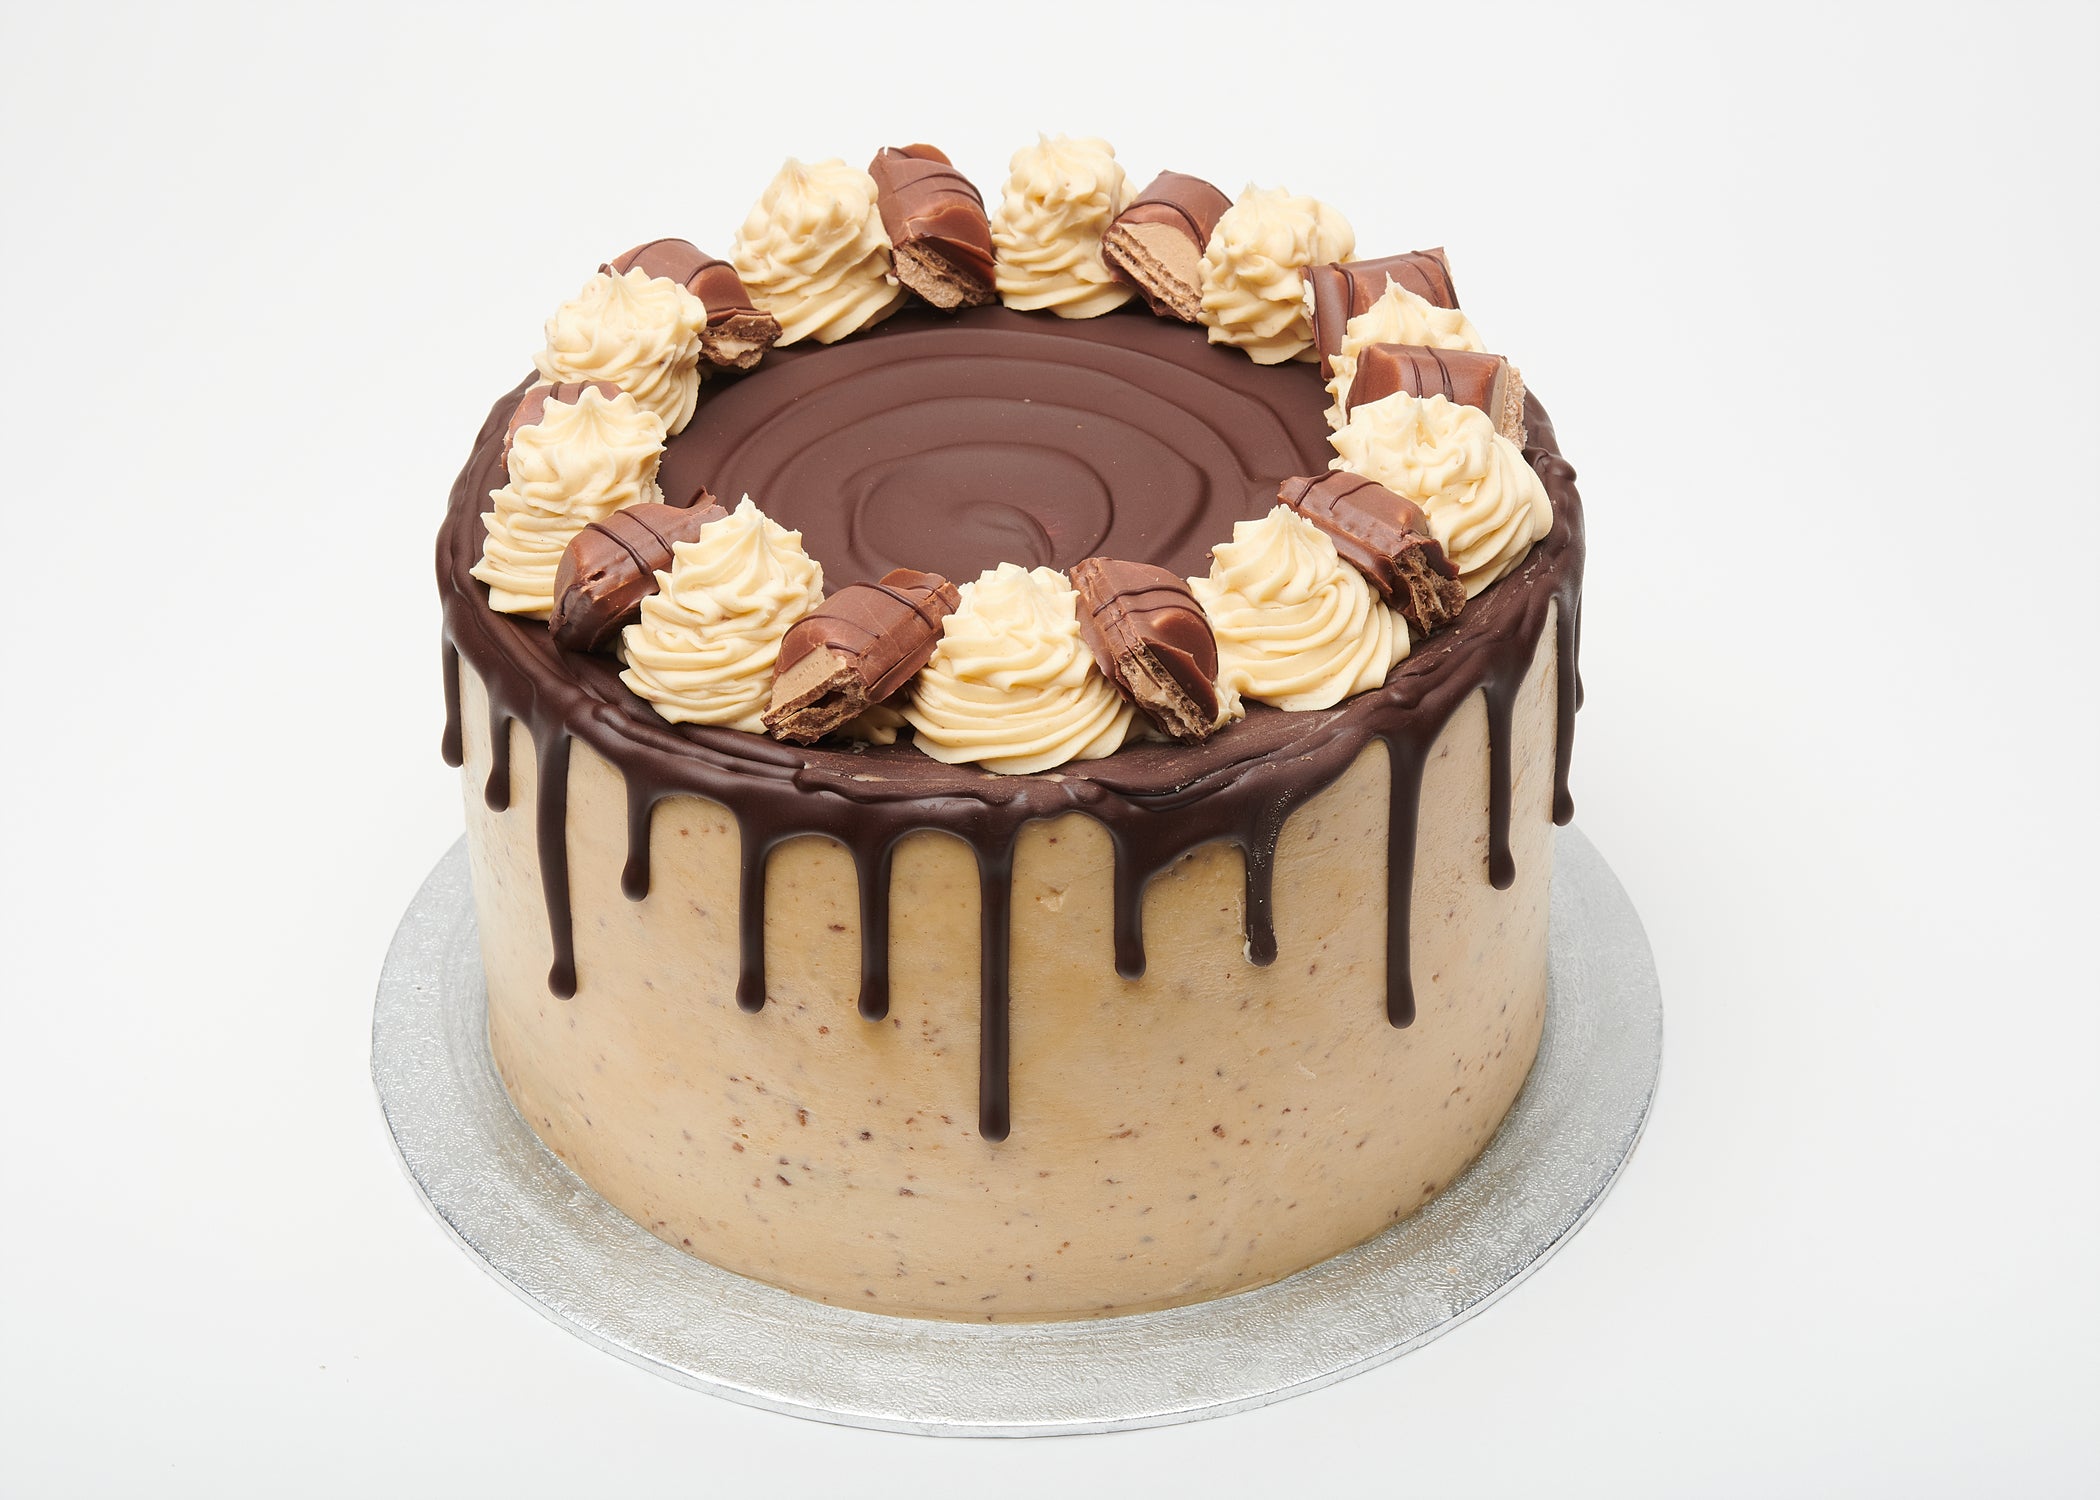 Deluxe Chocolate Hazelnut Wafer Cake | Kinder Bueno Cake Delivery –  Desserts Delivered Bakery